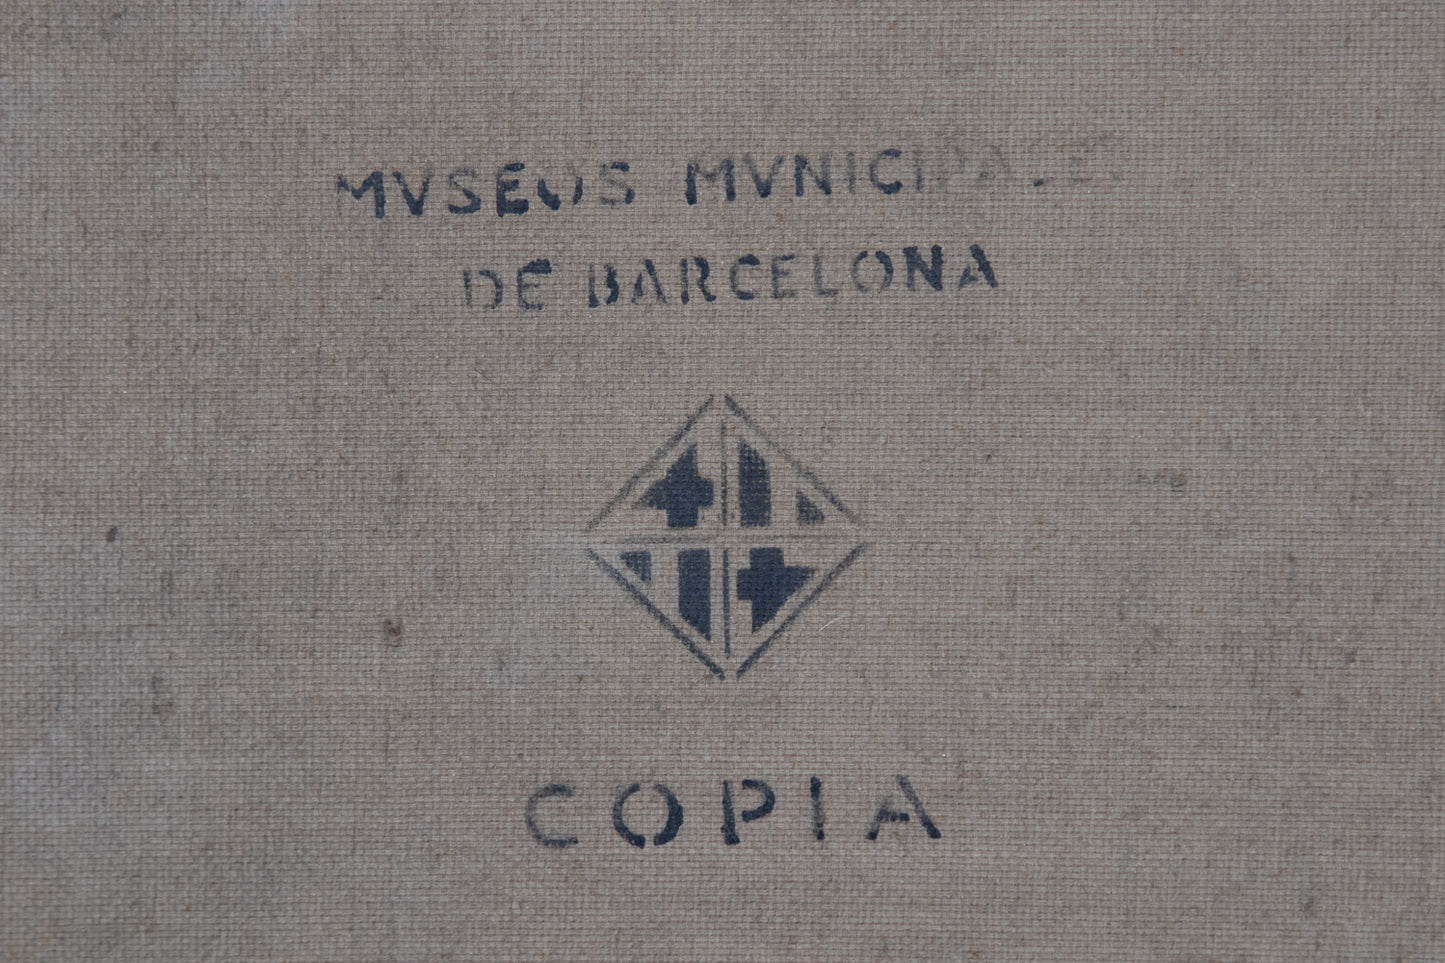 Jaquim Mir - Study of a Church - Stamped Reverse Mvseos Mvnicipa De Barcelona Copia